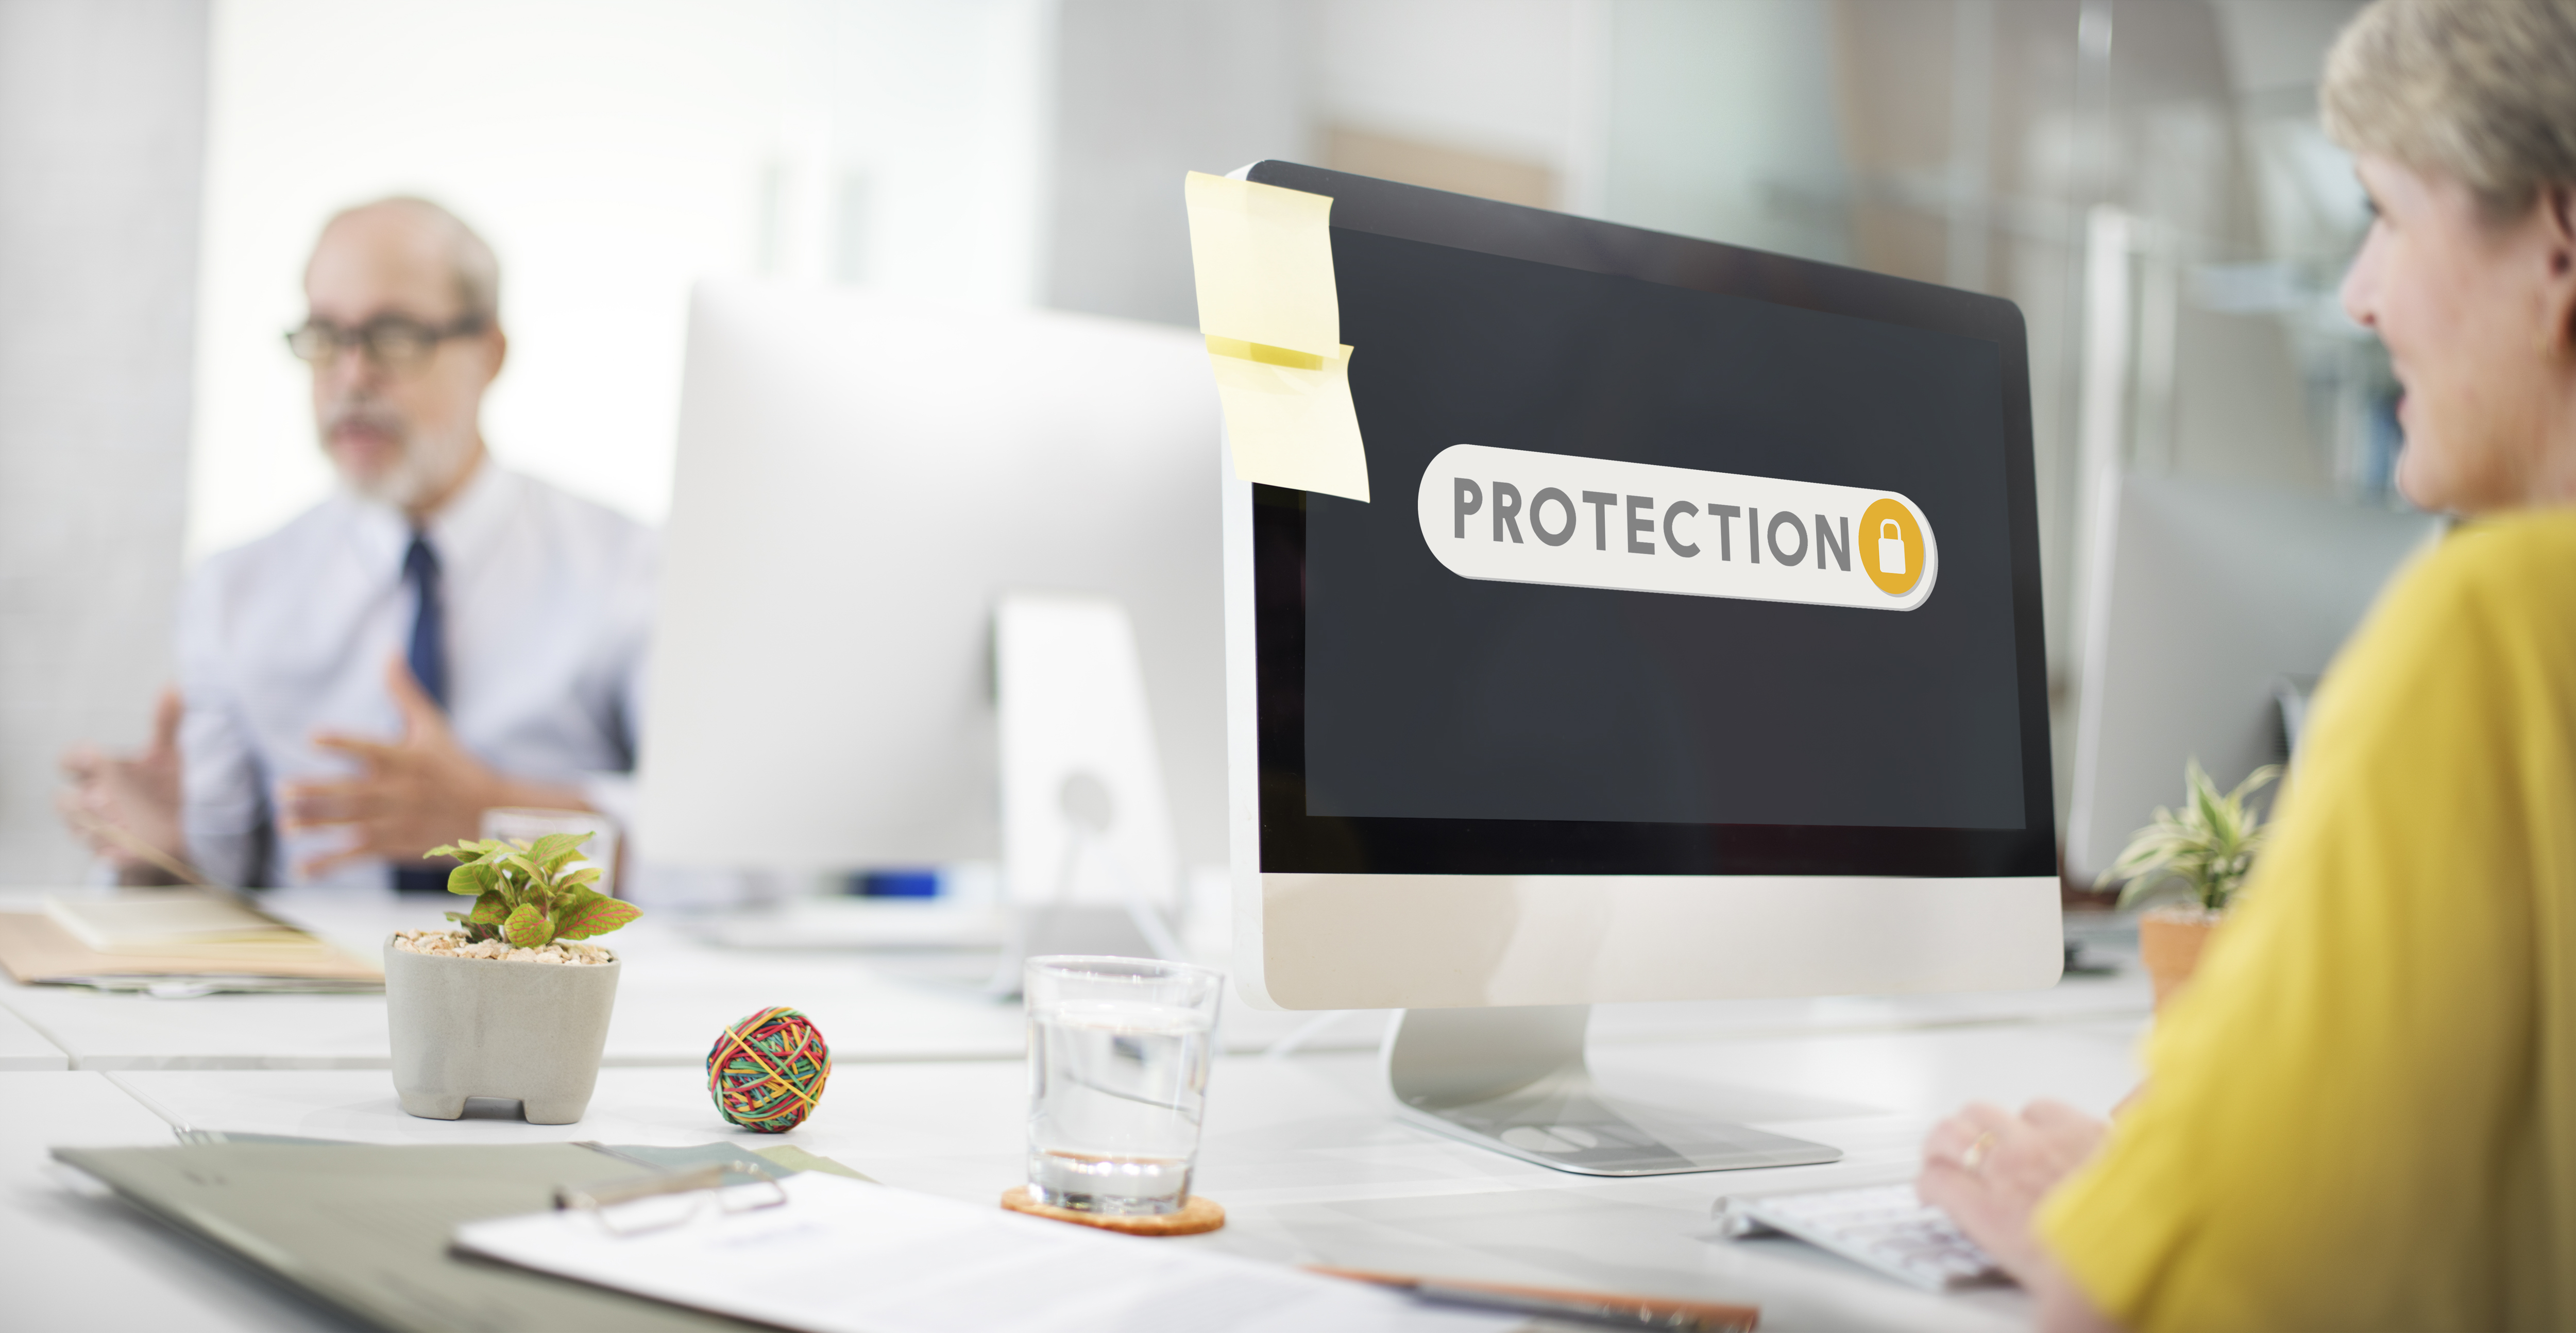 protection-accessible-permission-verification-security-concept.jpg